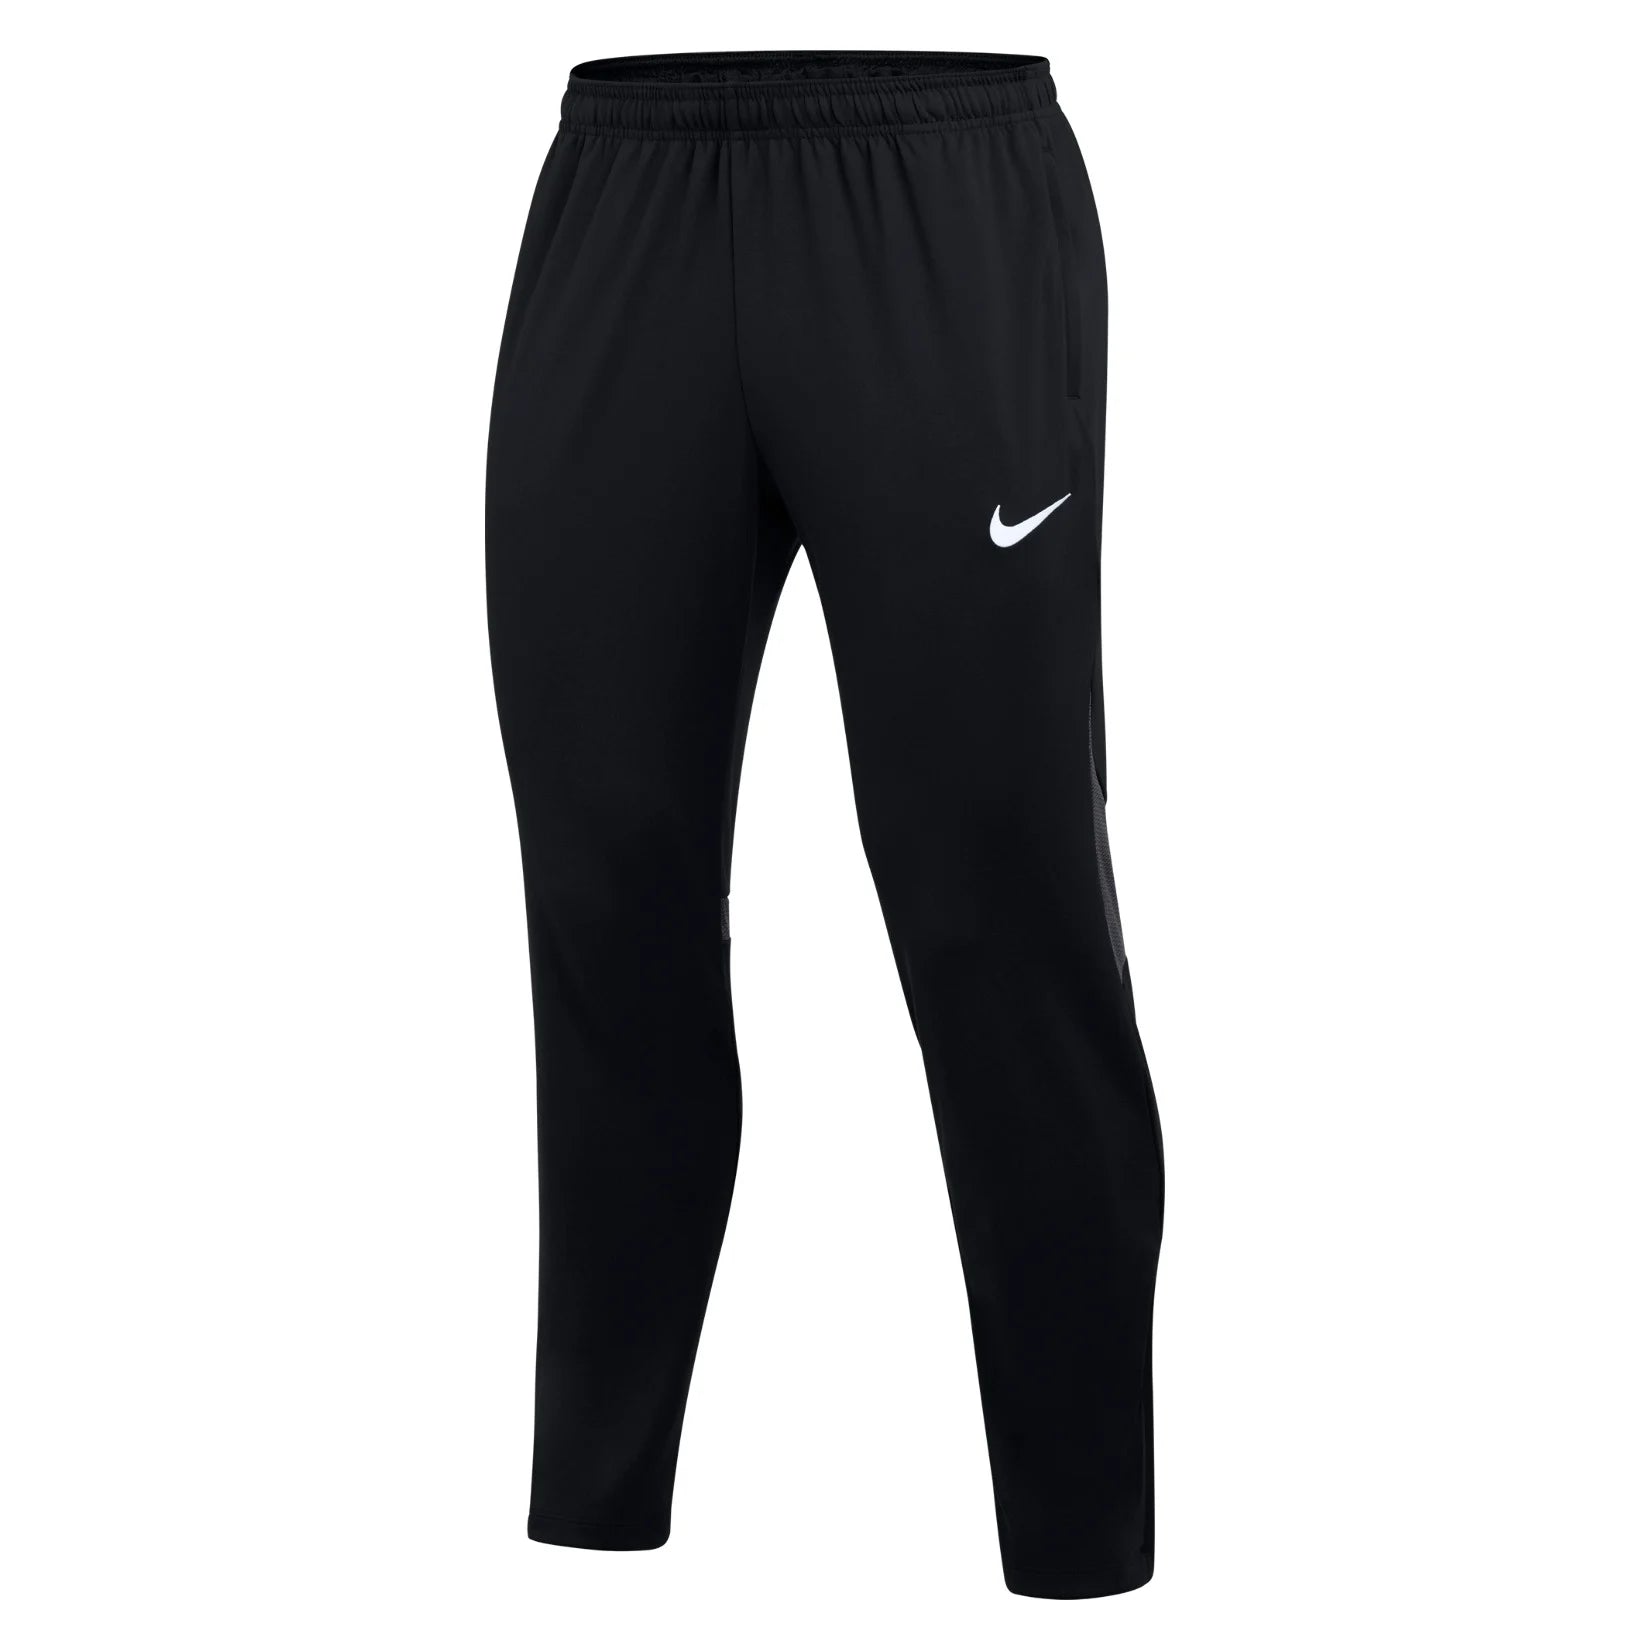 2023/24 Nike Referee Pants - 2XL Only